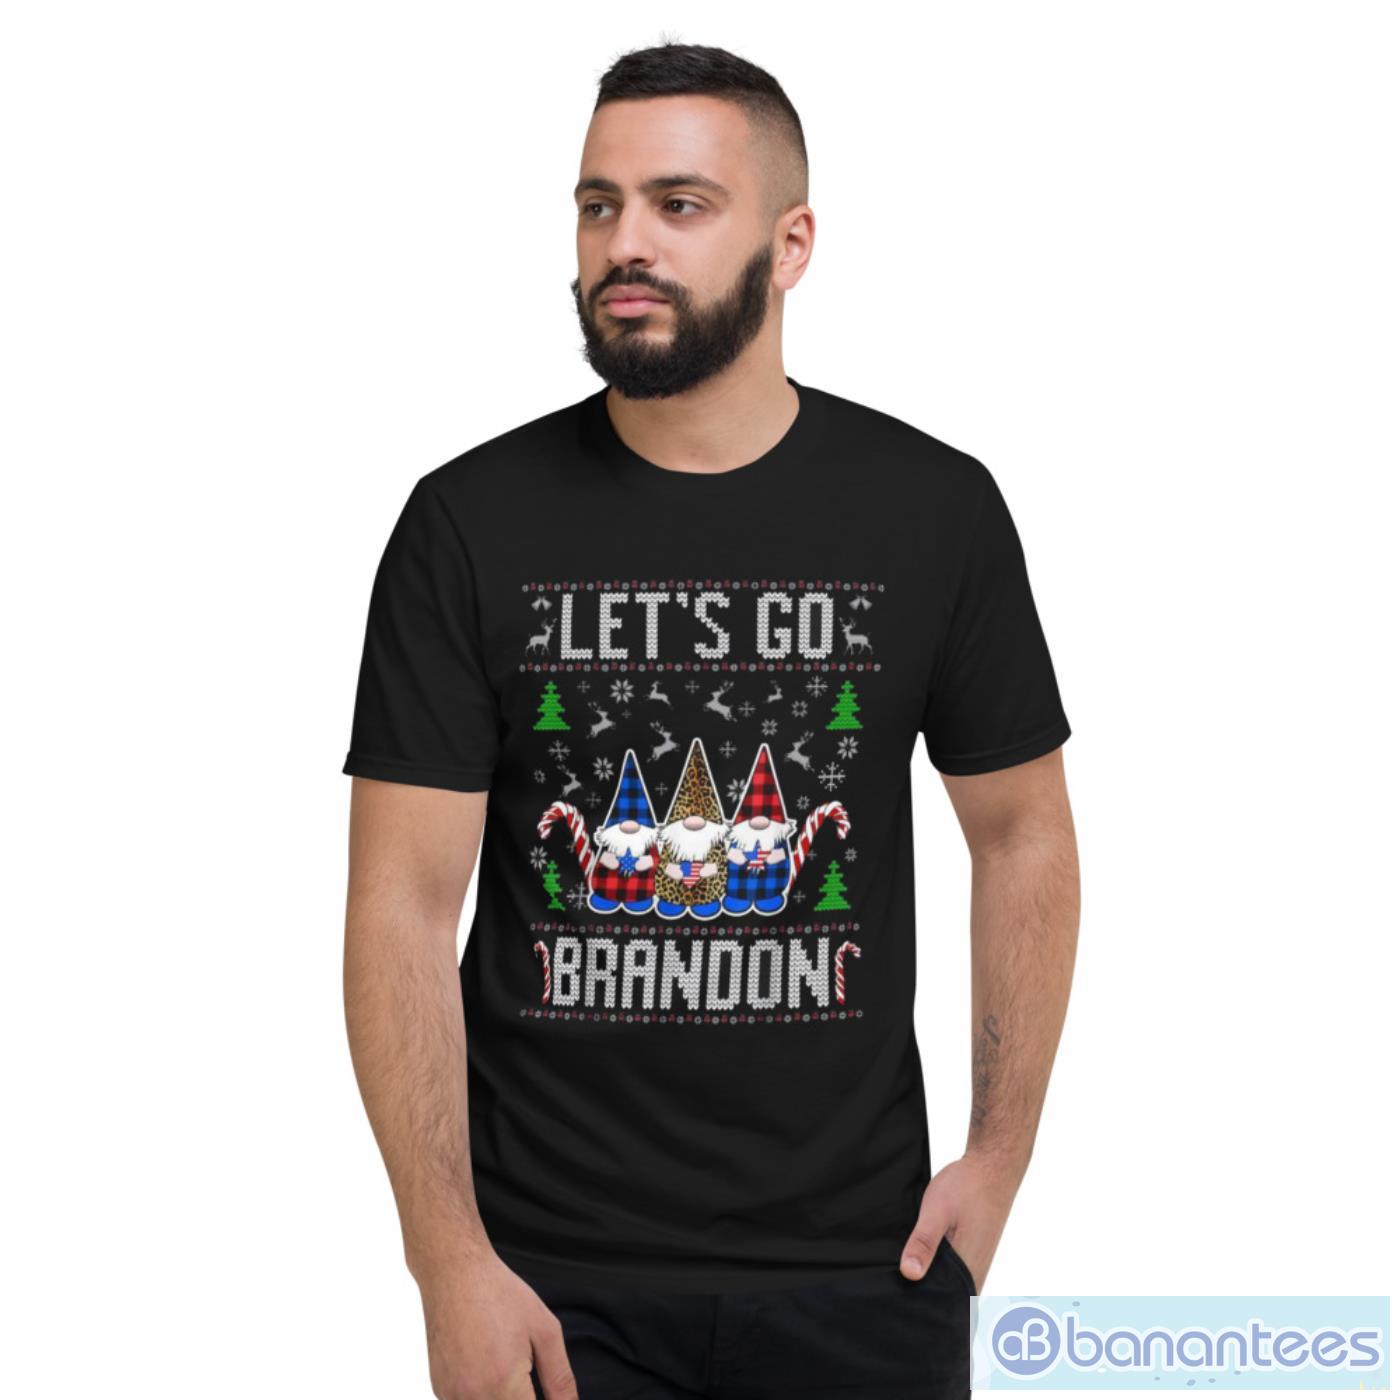 Lets Go brandon Short-Sleeve Unisex T-Shirt